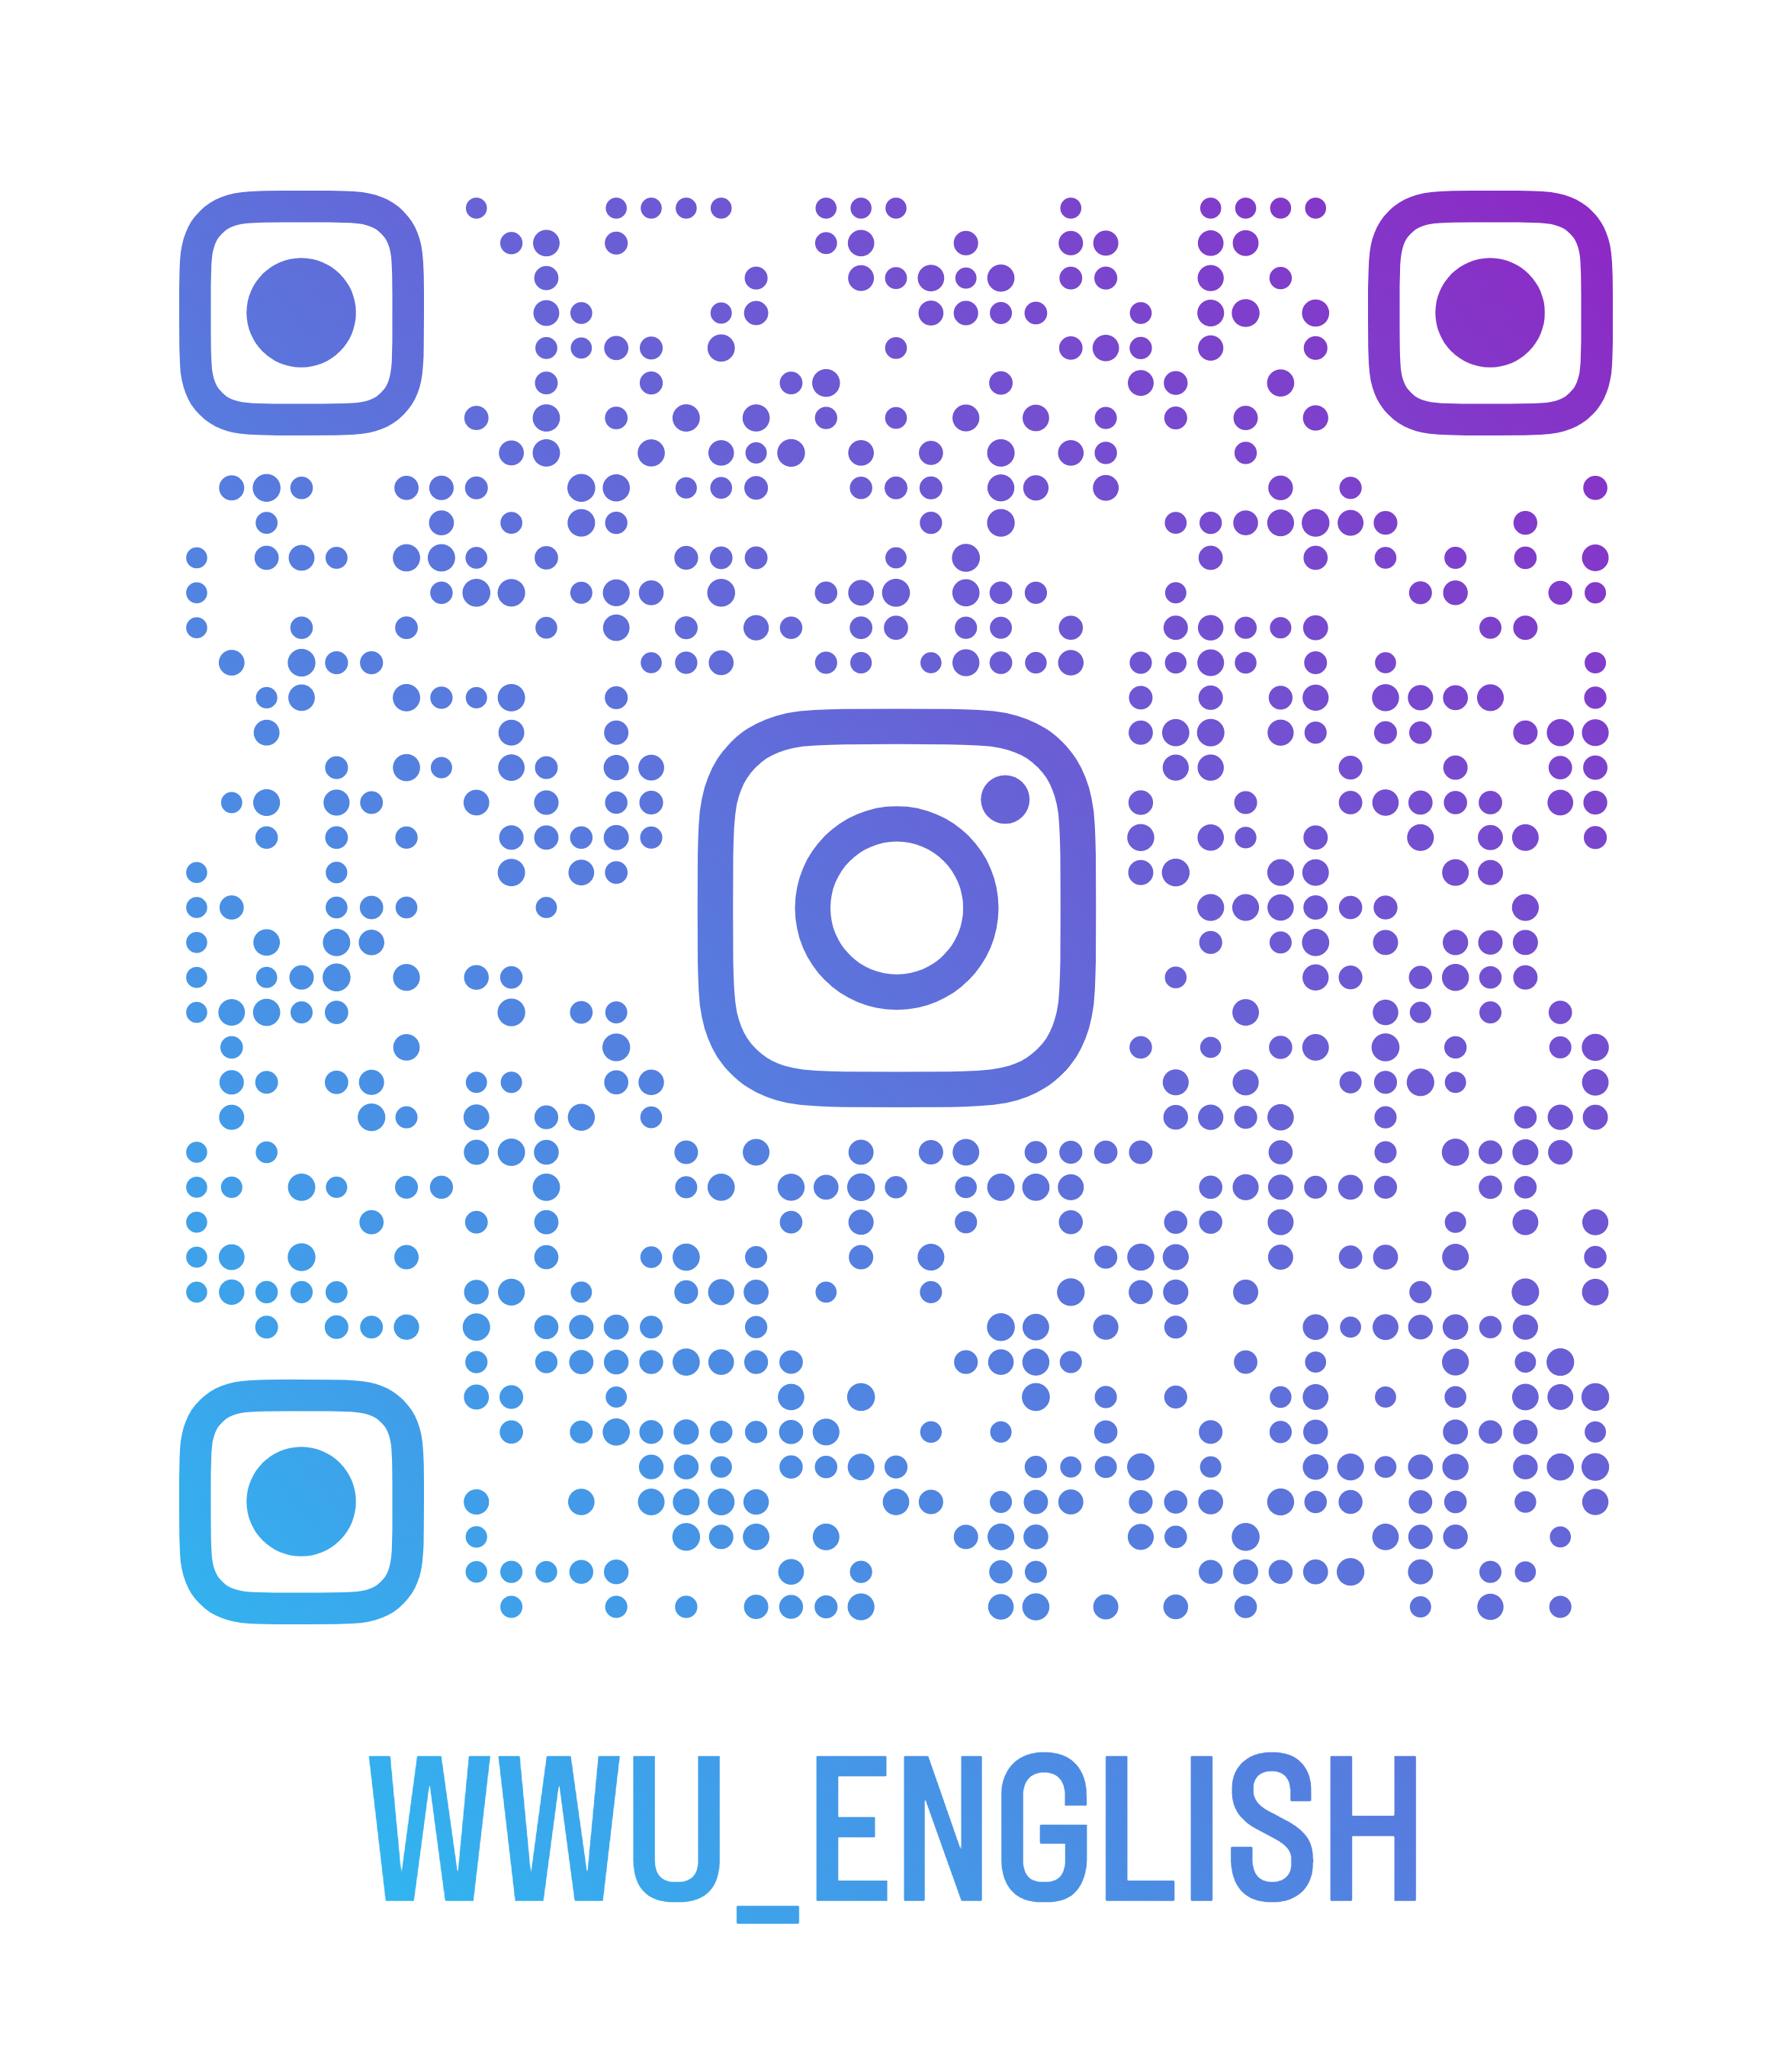 QR code for WWU_English on Instagram